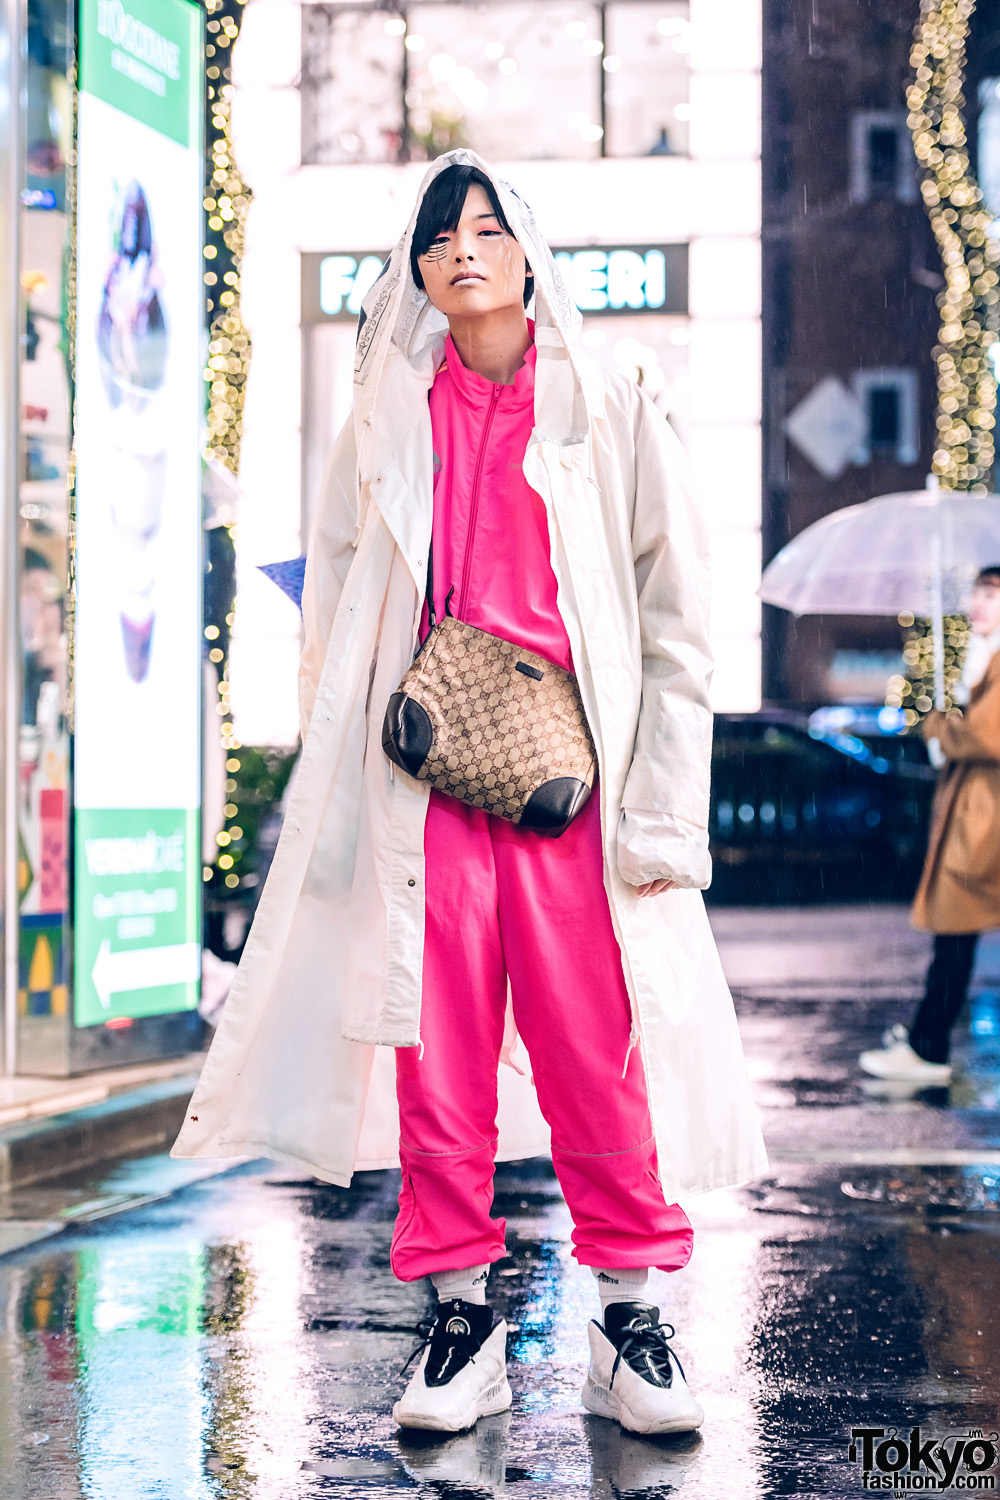 Harajuku Style w/ Face Makeup, Vintage Coat, Gosha Rubchinskiy Track Suit, Gucci Bag & Alexander Wang Sneakers